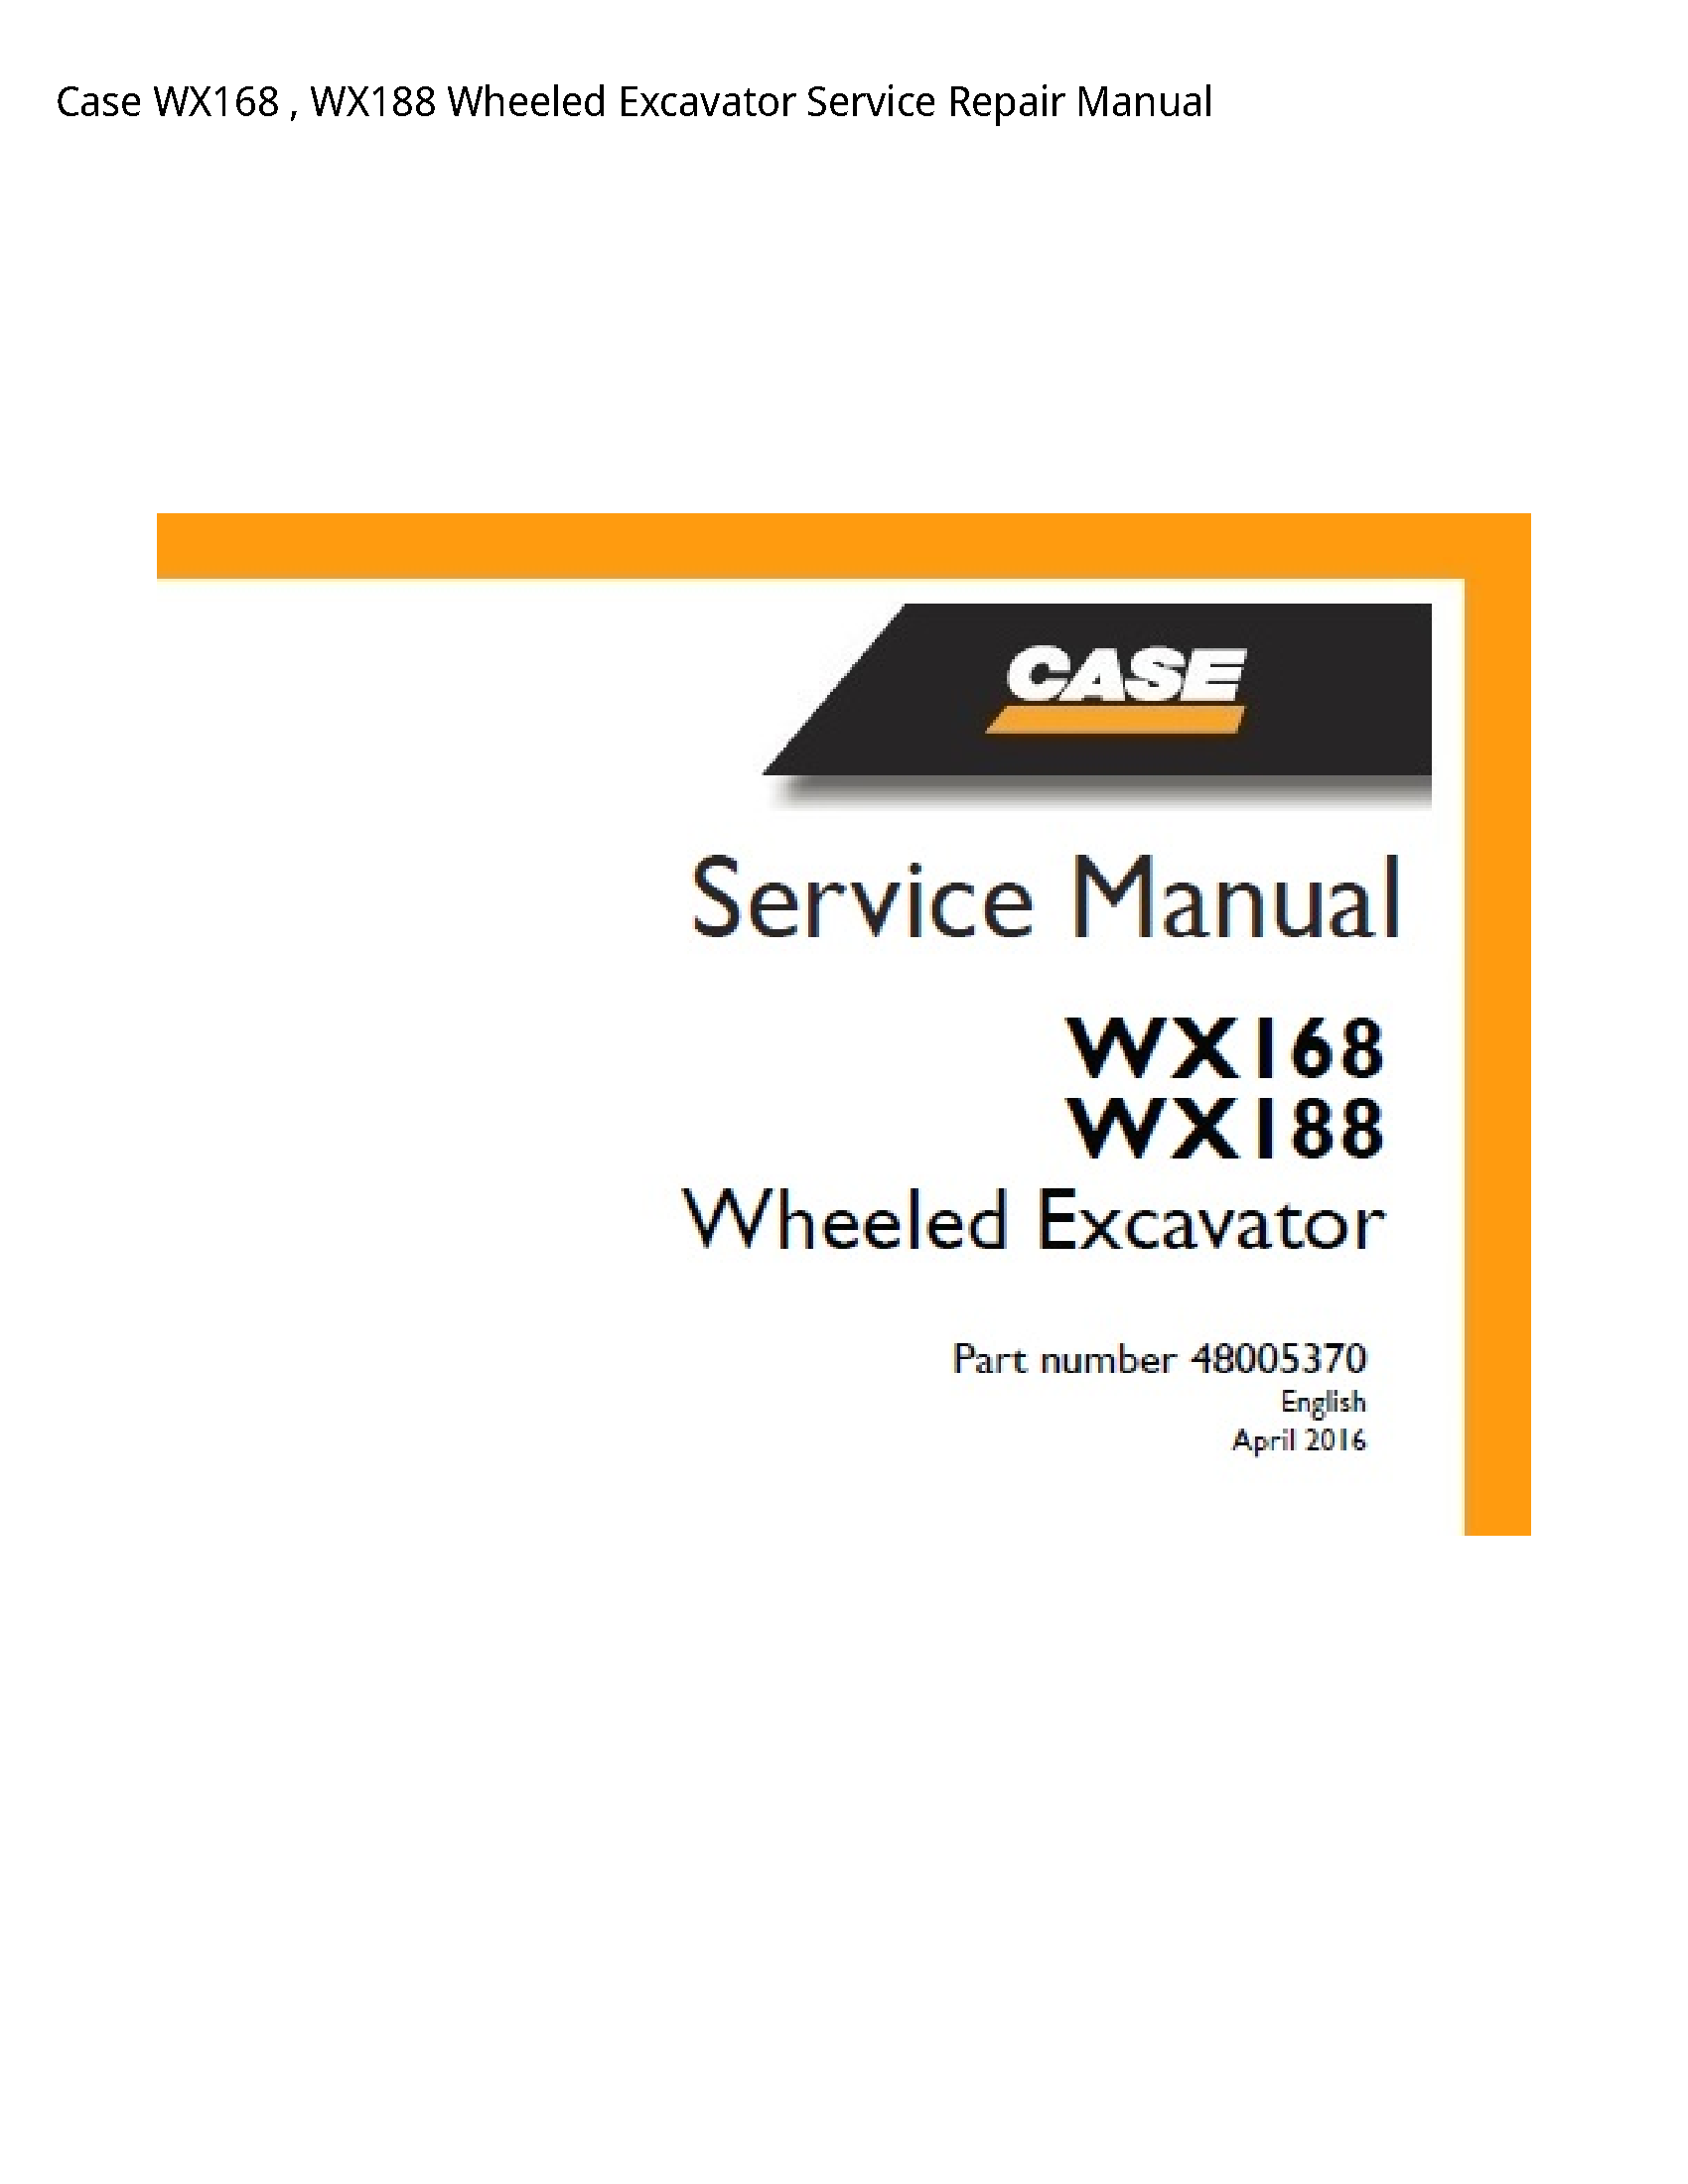 Case/Case IH WX168 Wheeled Excavator manual